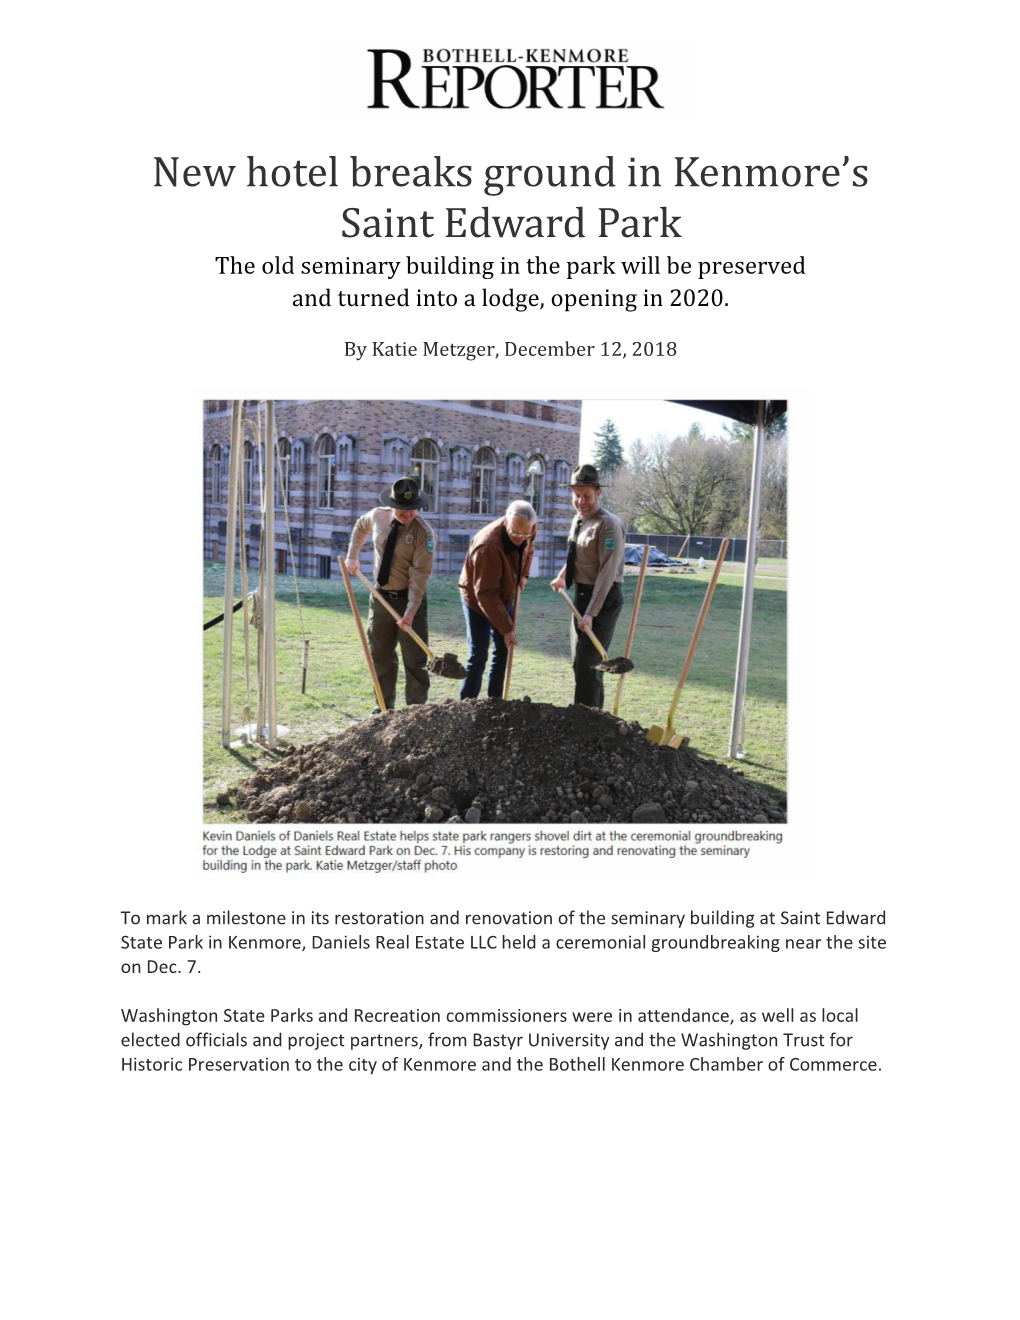 New Hotel Breaks Ground in Kenmore's Saint Edward Park